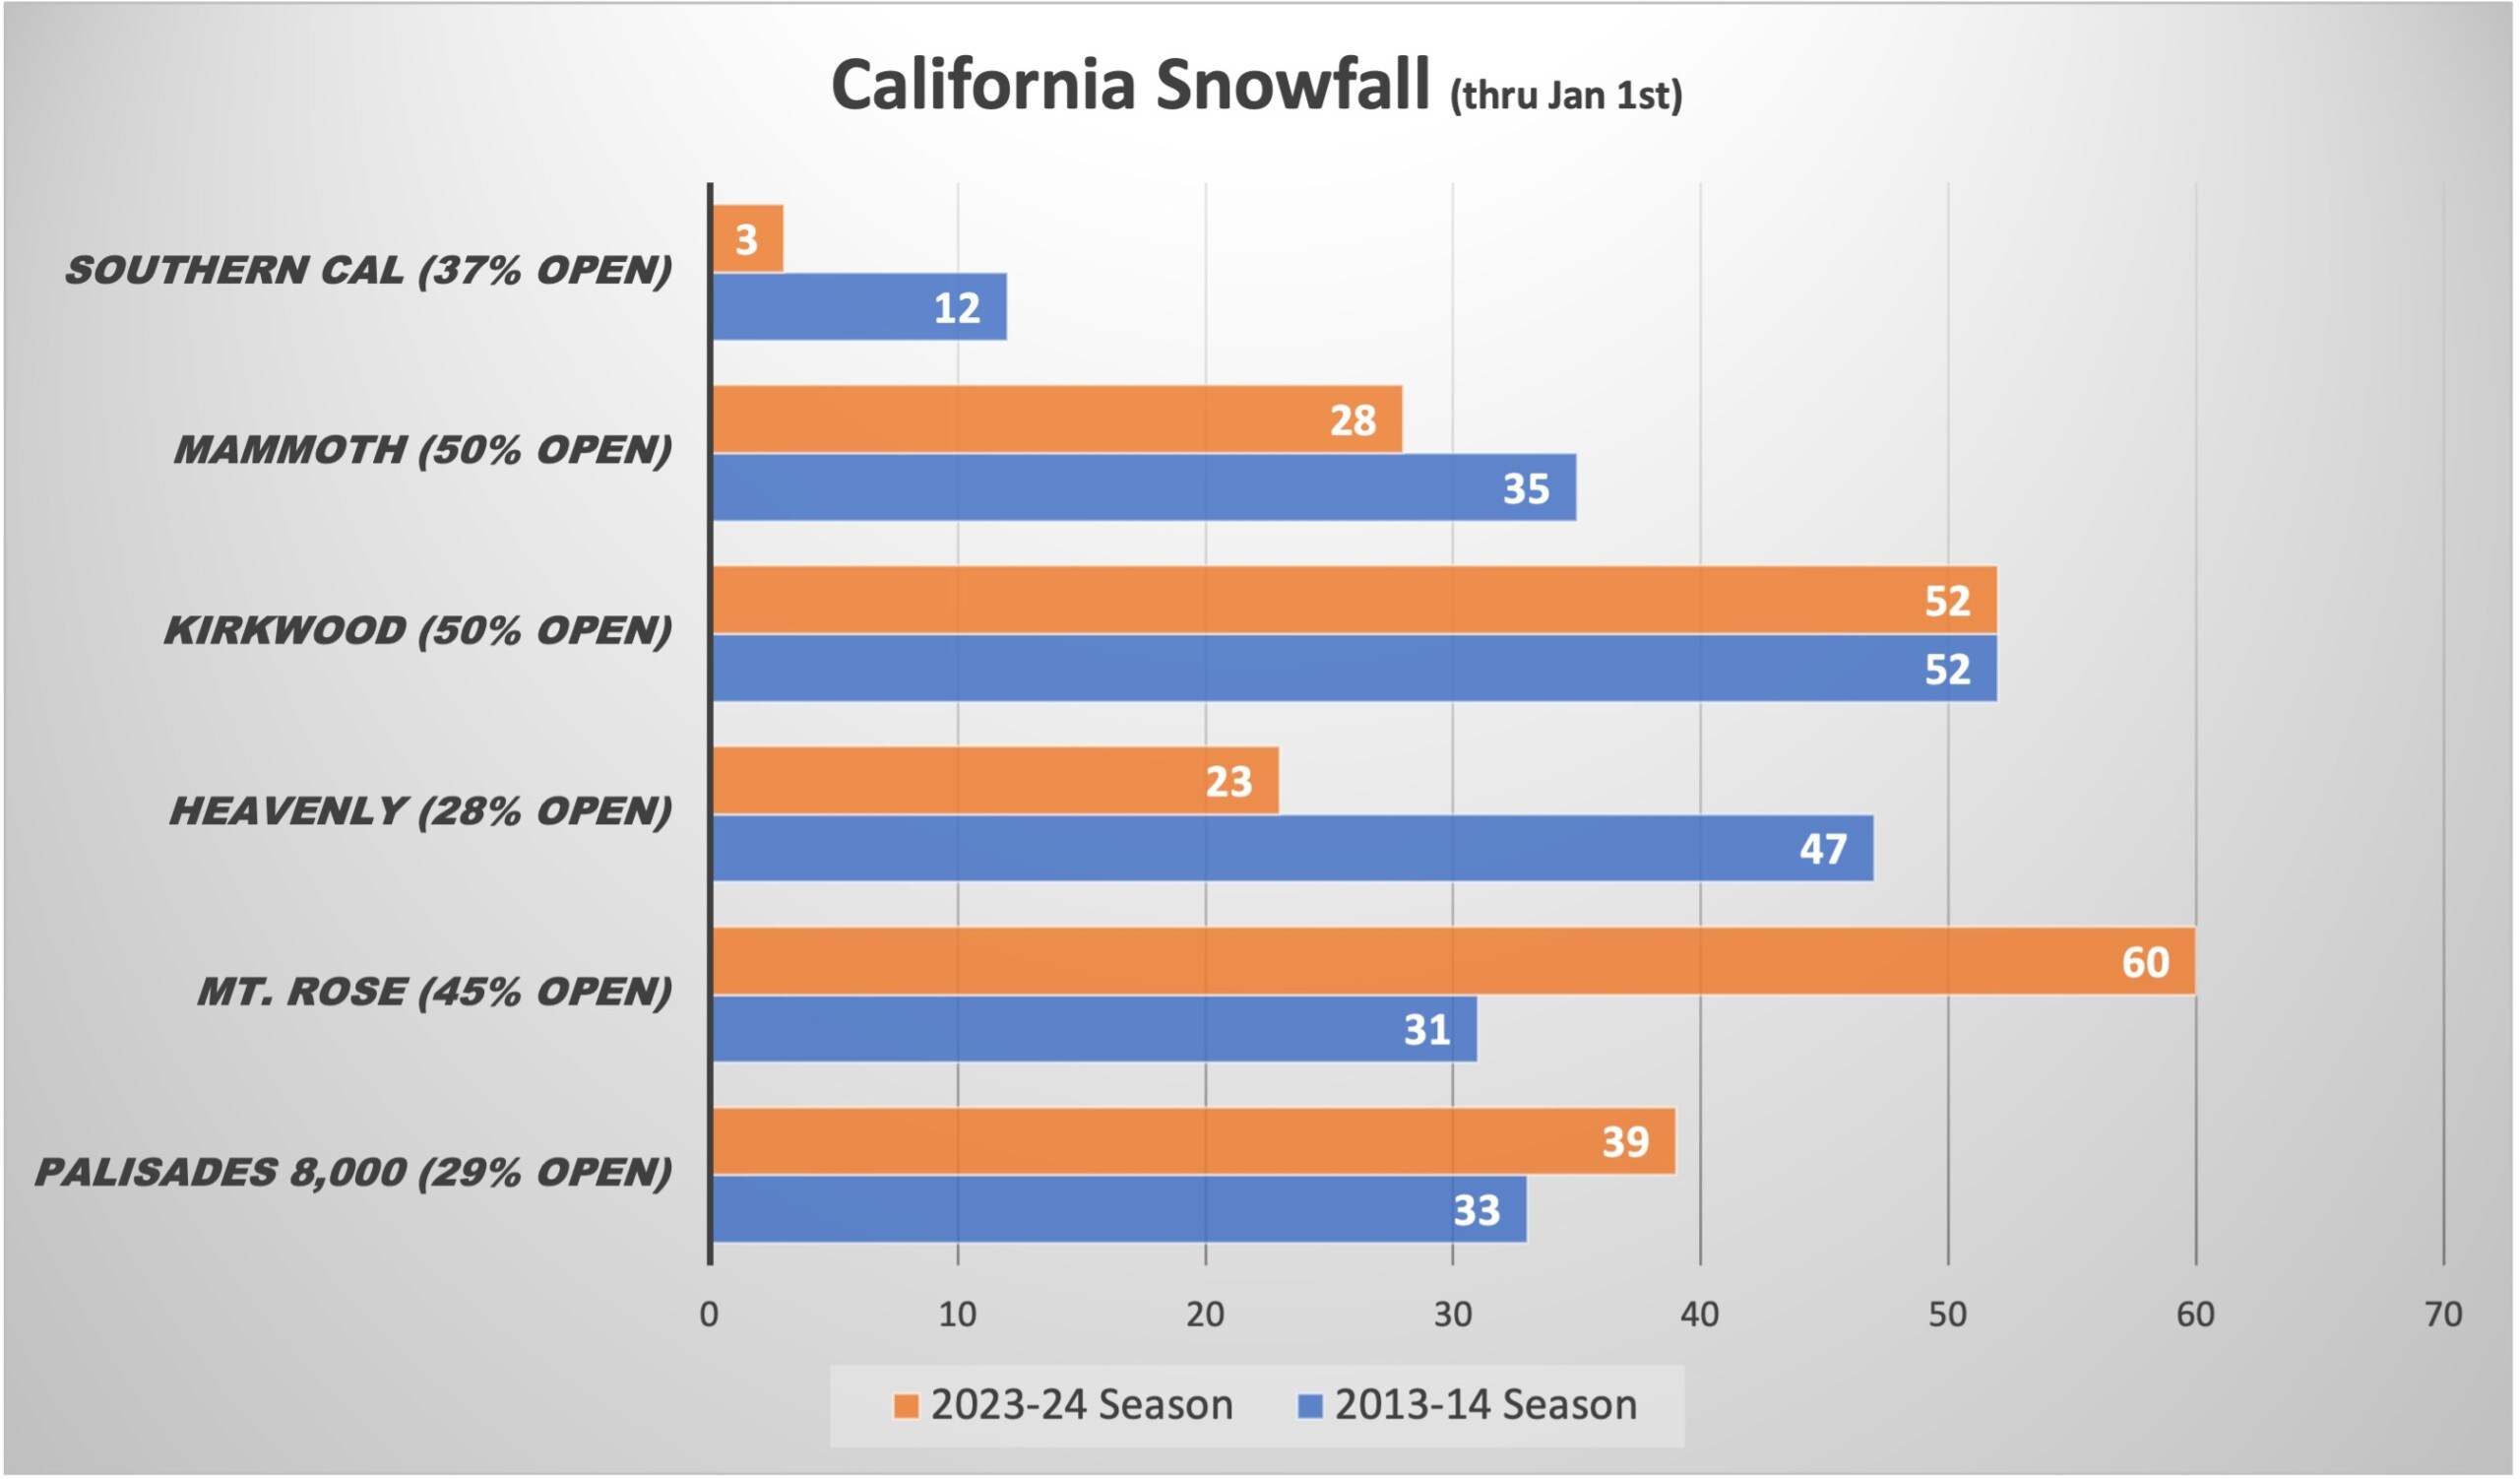 2023/24 California Ski Season Compare to 2013/14 ski season